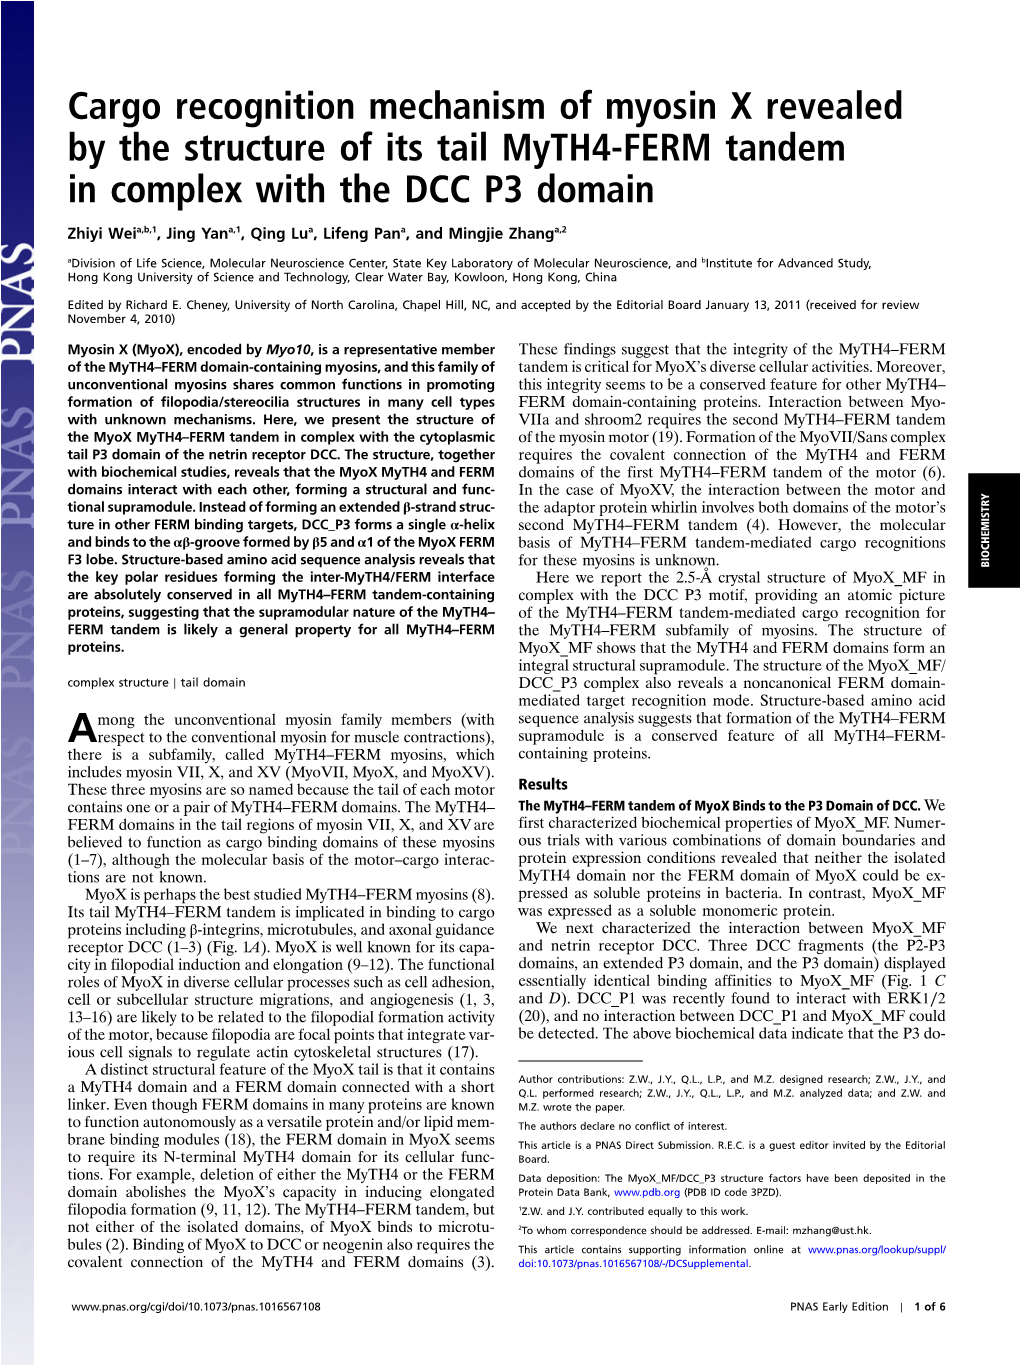 PDF Full Version